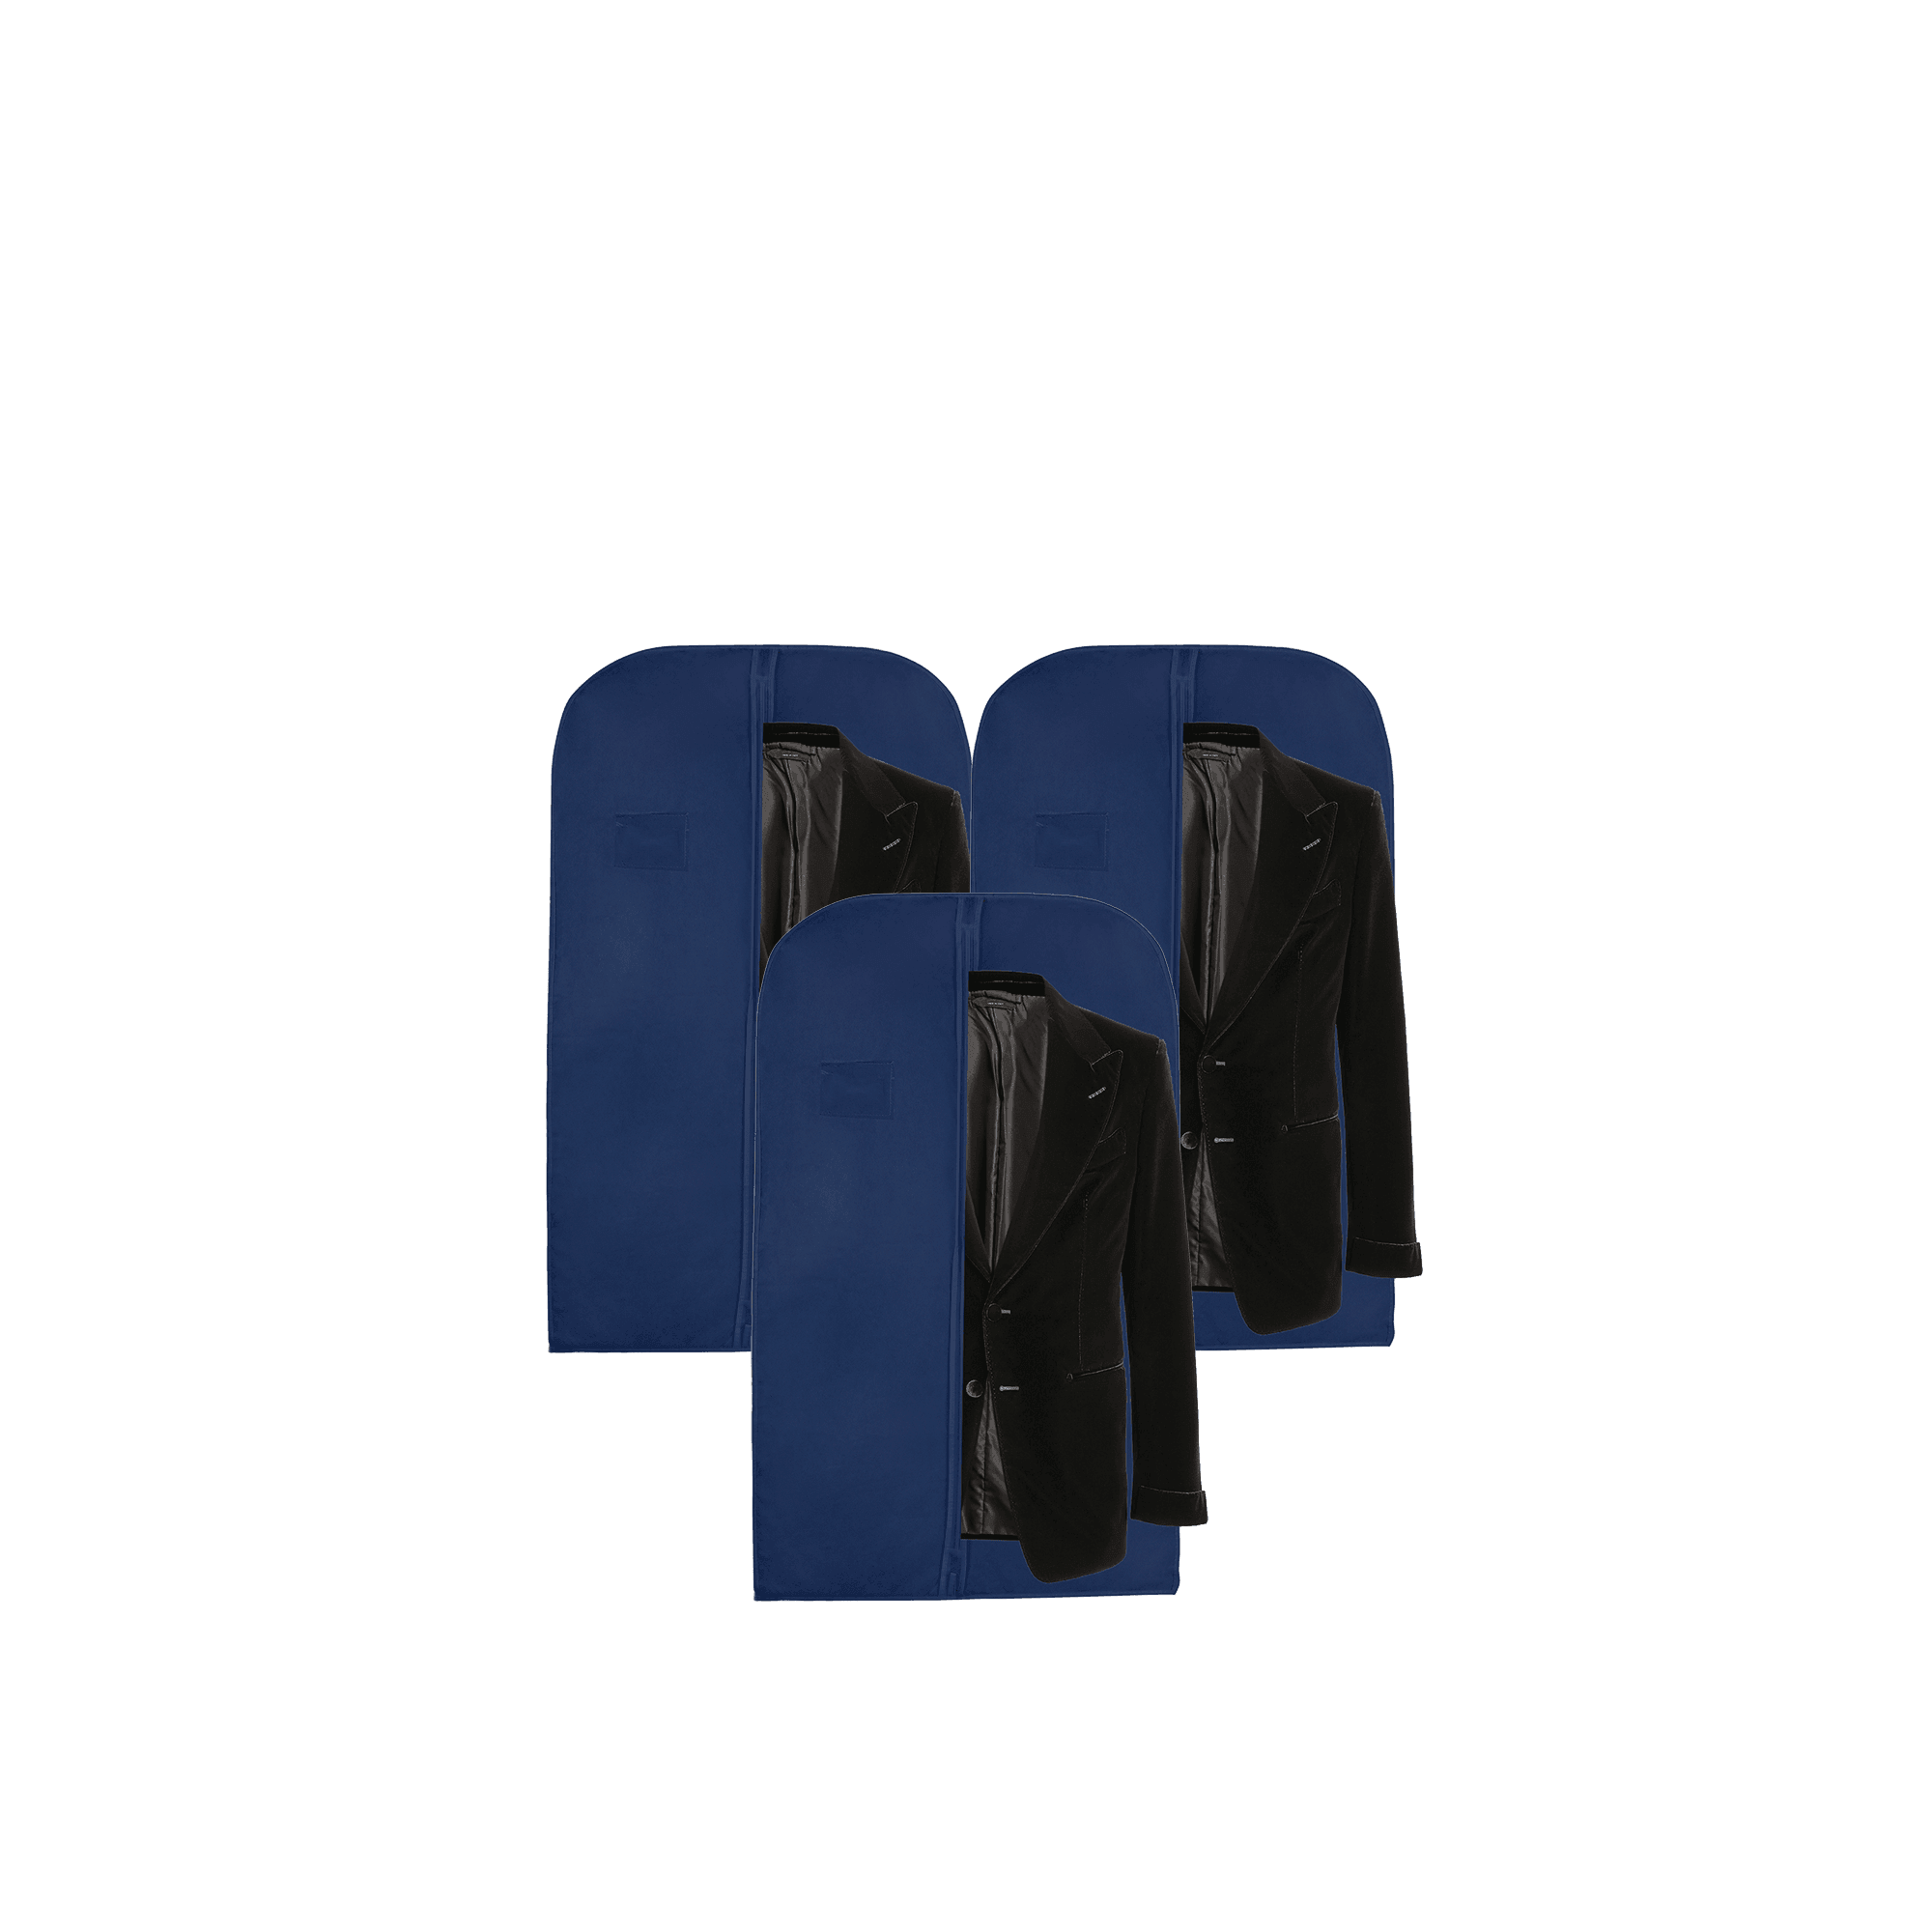 40" Men Suit Cover Bags - Wedcova UK Ltd